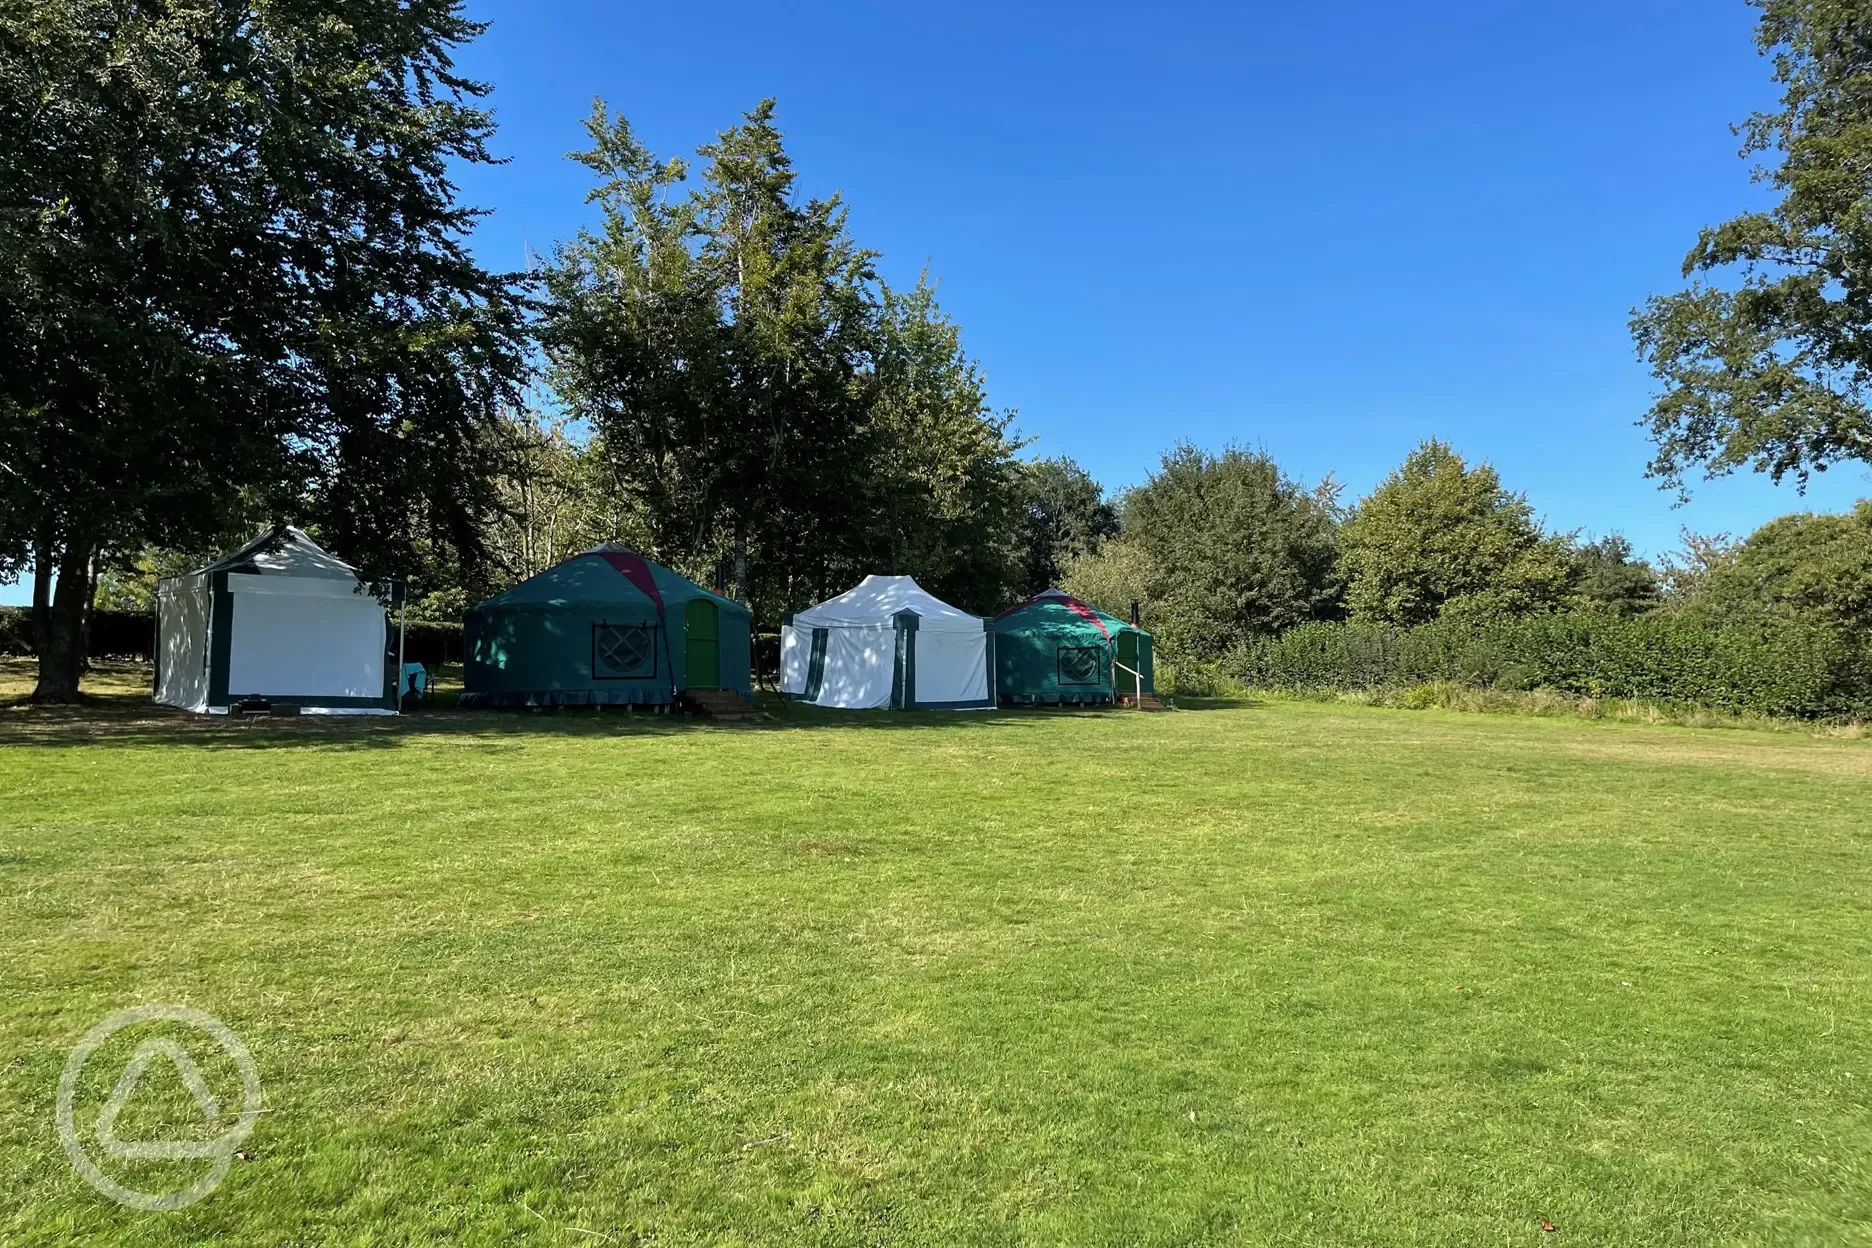 Yurts on site